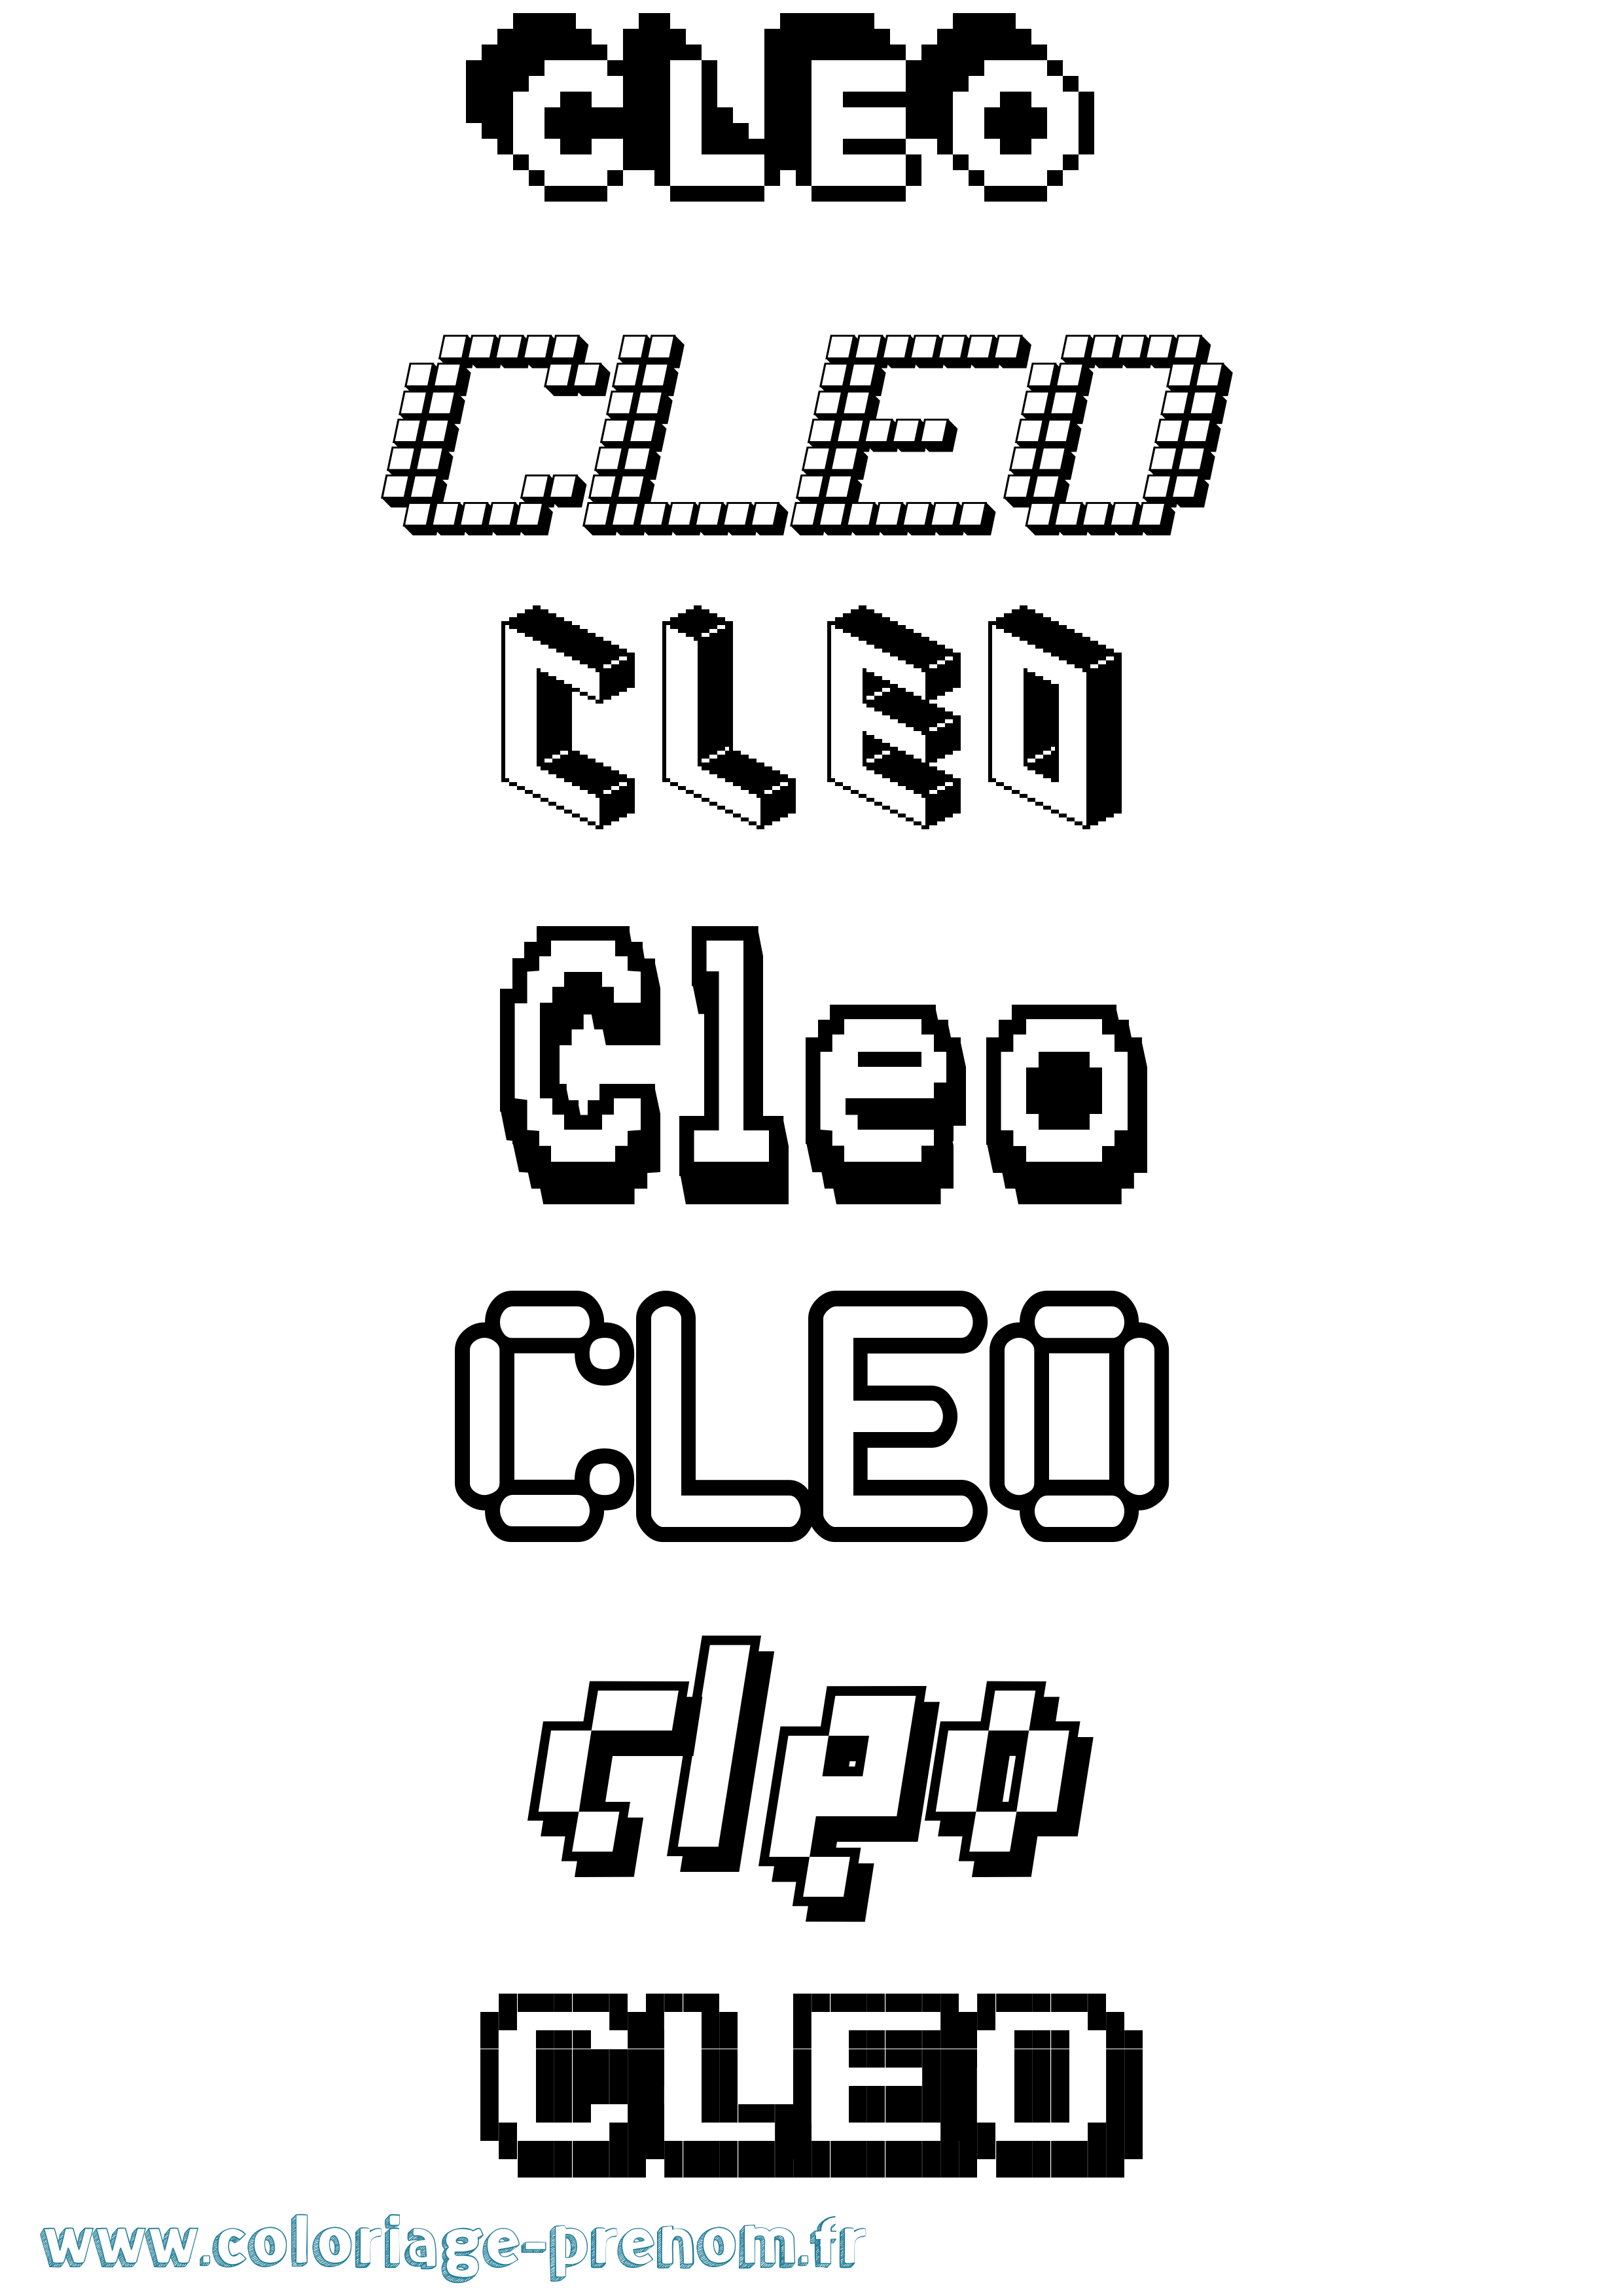 Coloriage prénom Cleo Pixel